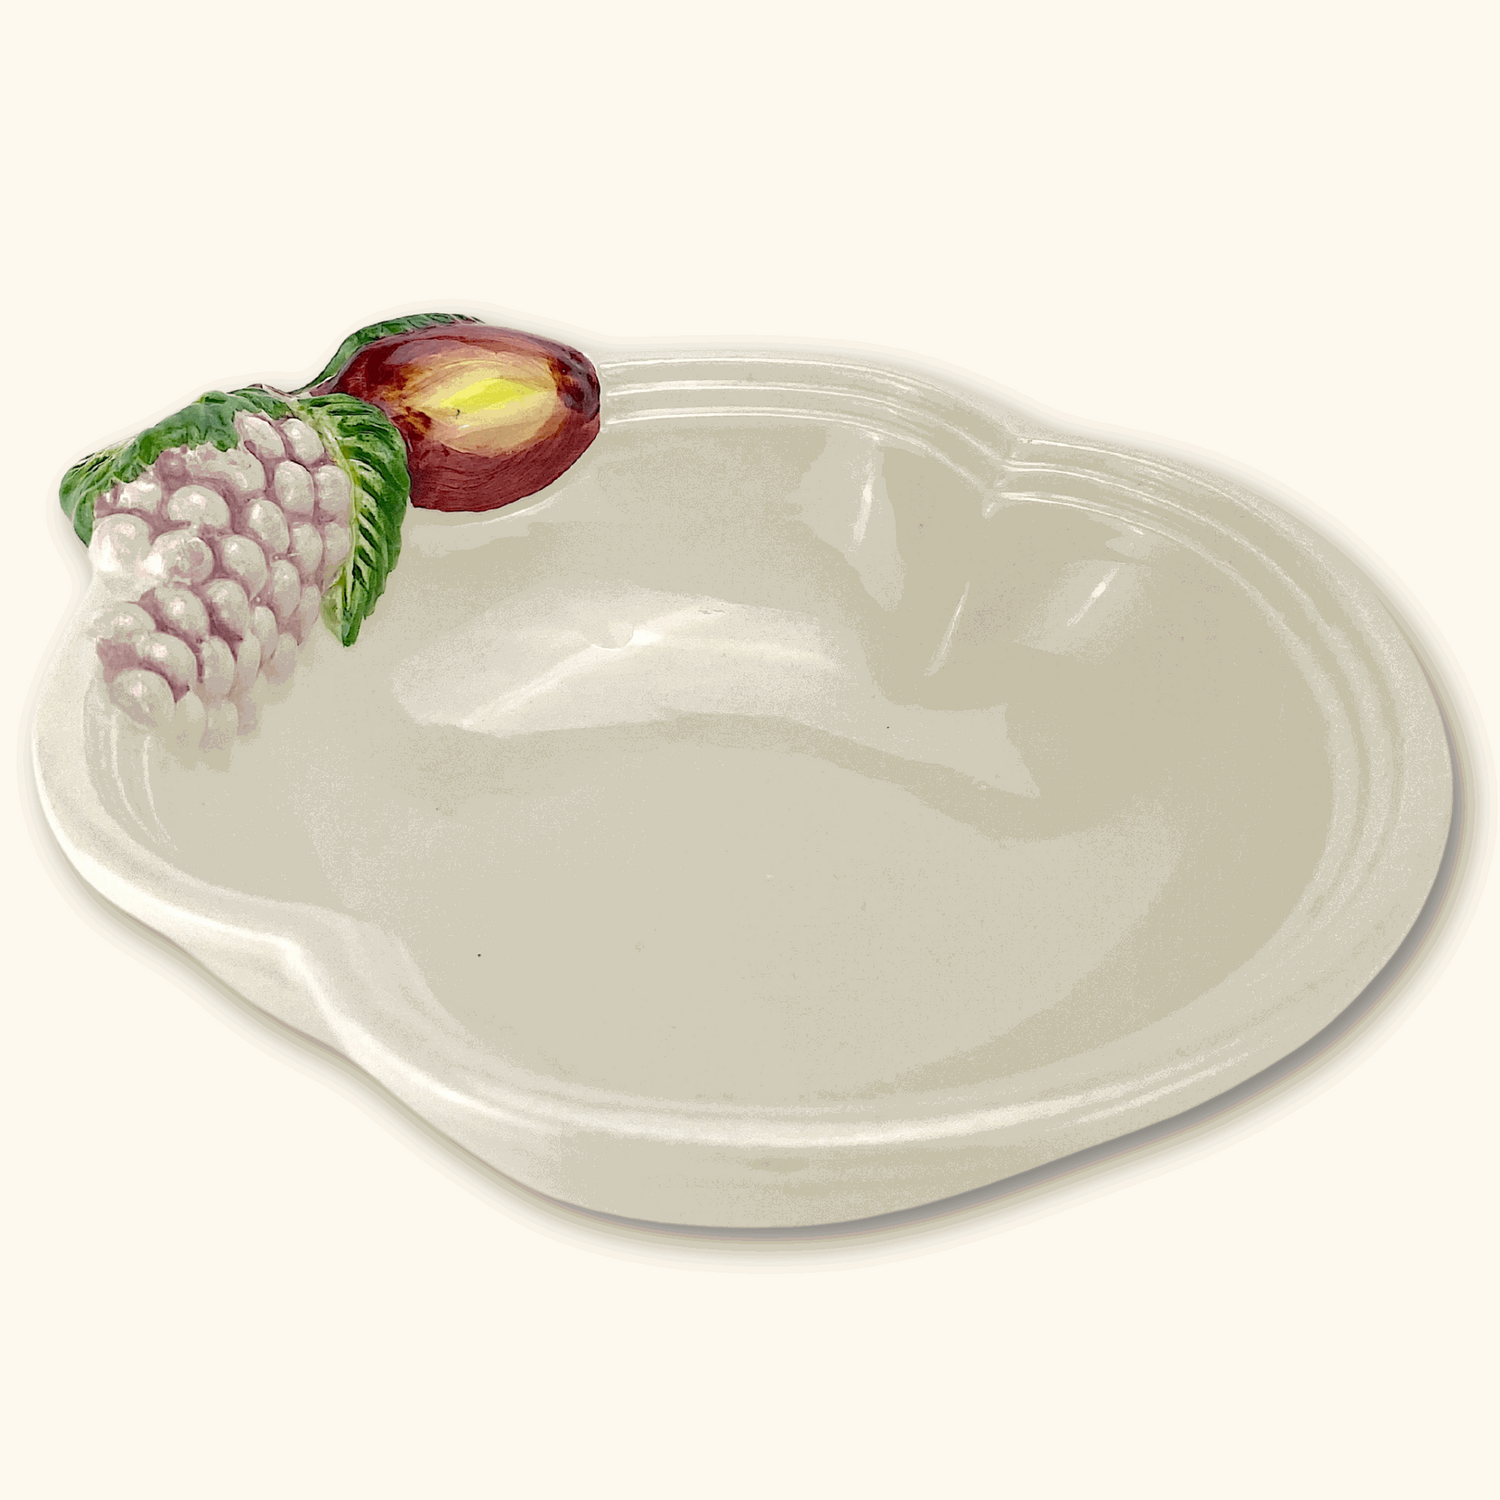 Ceramic Cream Fruit Bowl with Grapes - Sunshine Thrift - Kitchenware